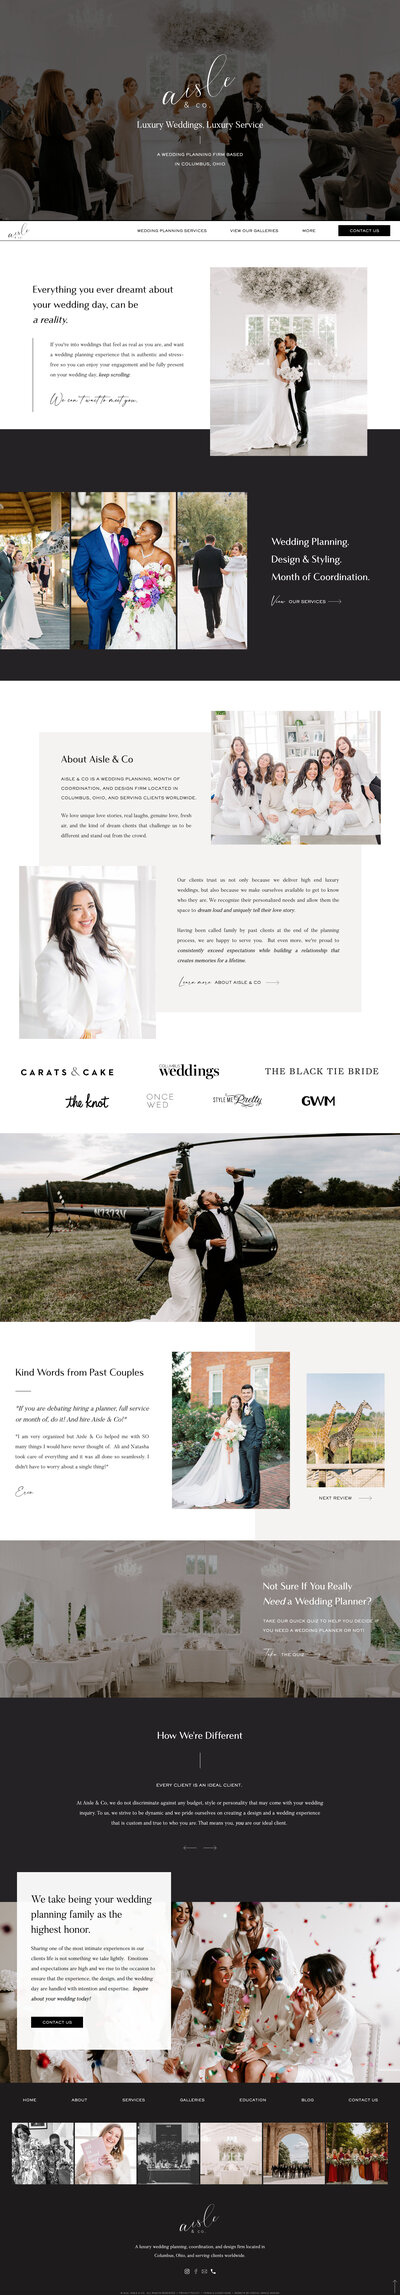 Custom Showit website for Aisle & Co, an Ohio wedding planning company